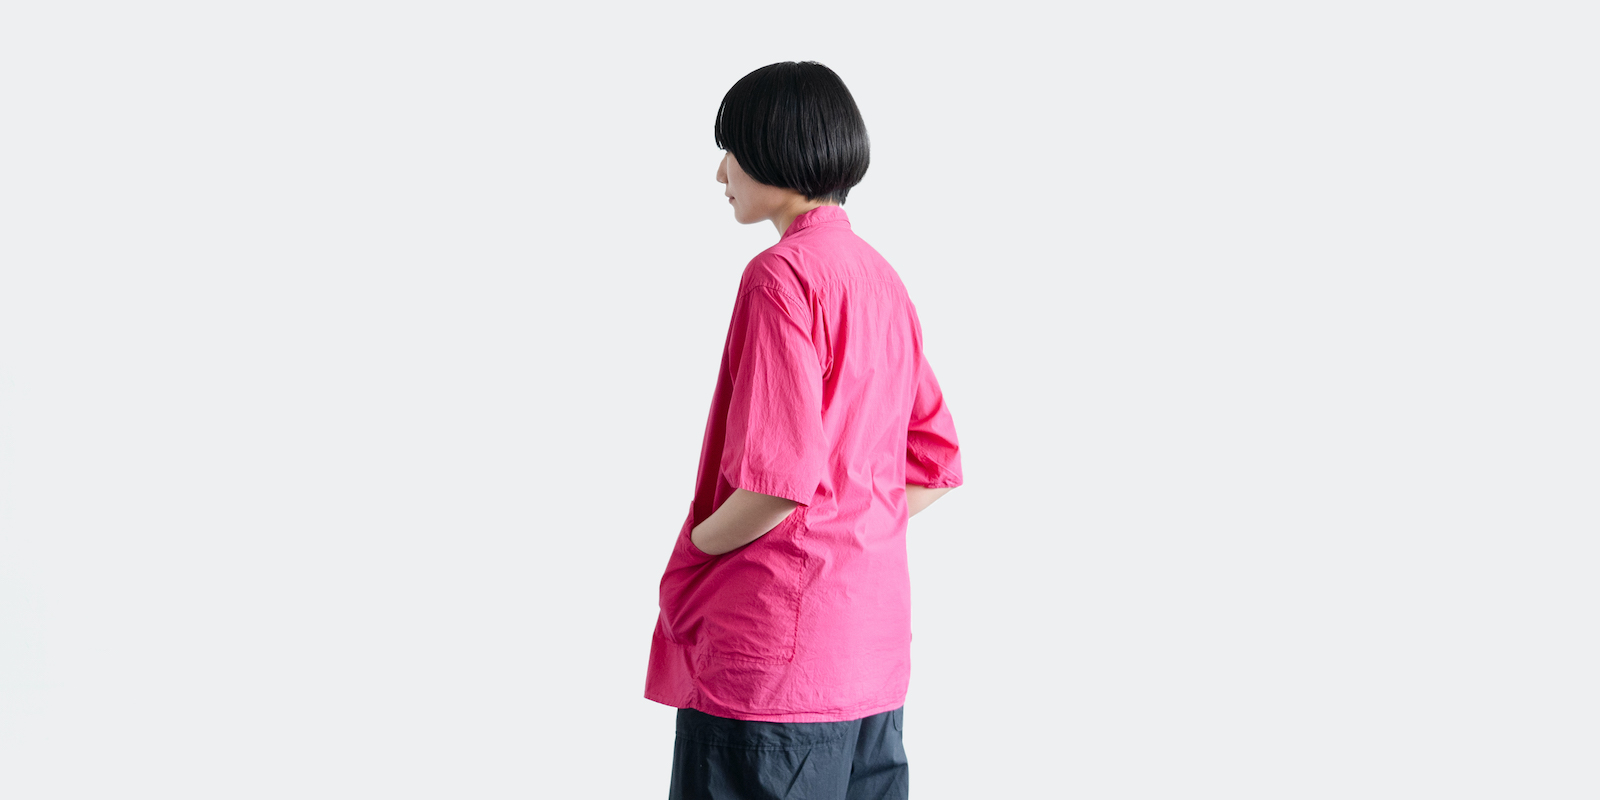 d WEAR サイドポケットシャツ・塩縮加工 ピンク・M【5月中旬出荷予定】